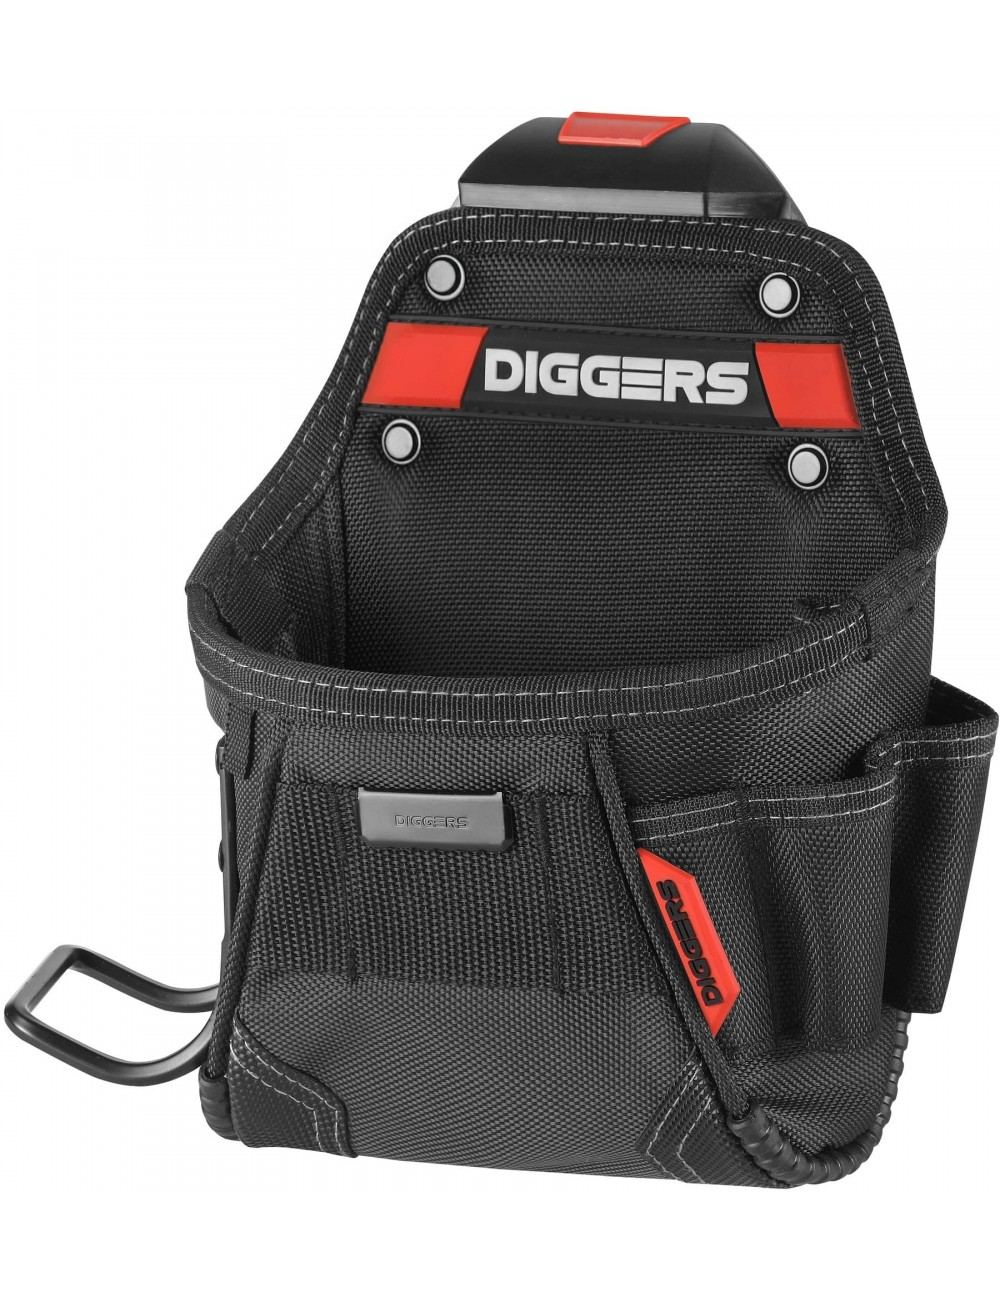 Torba narzędziowa Diggers All Purpose Pouch DK613